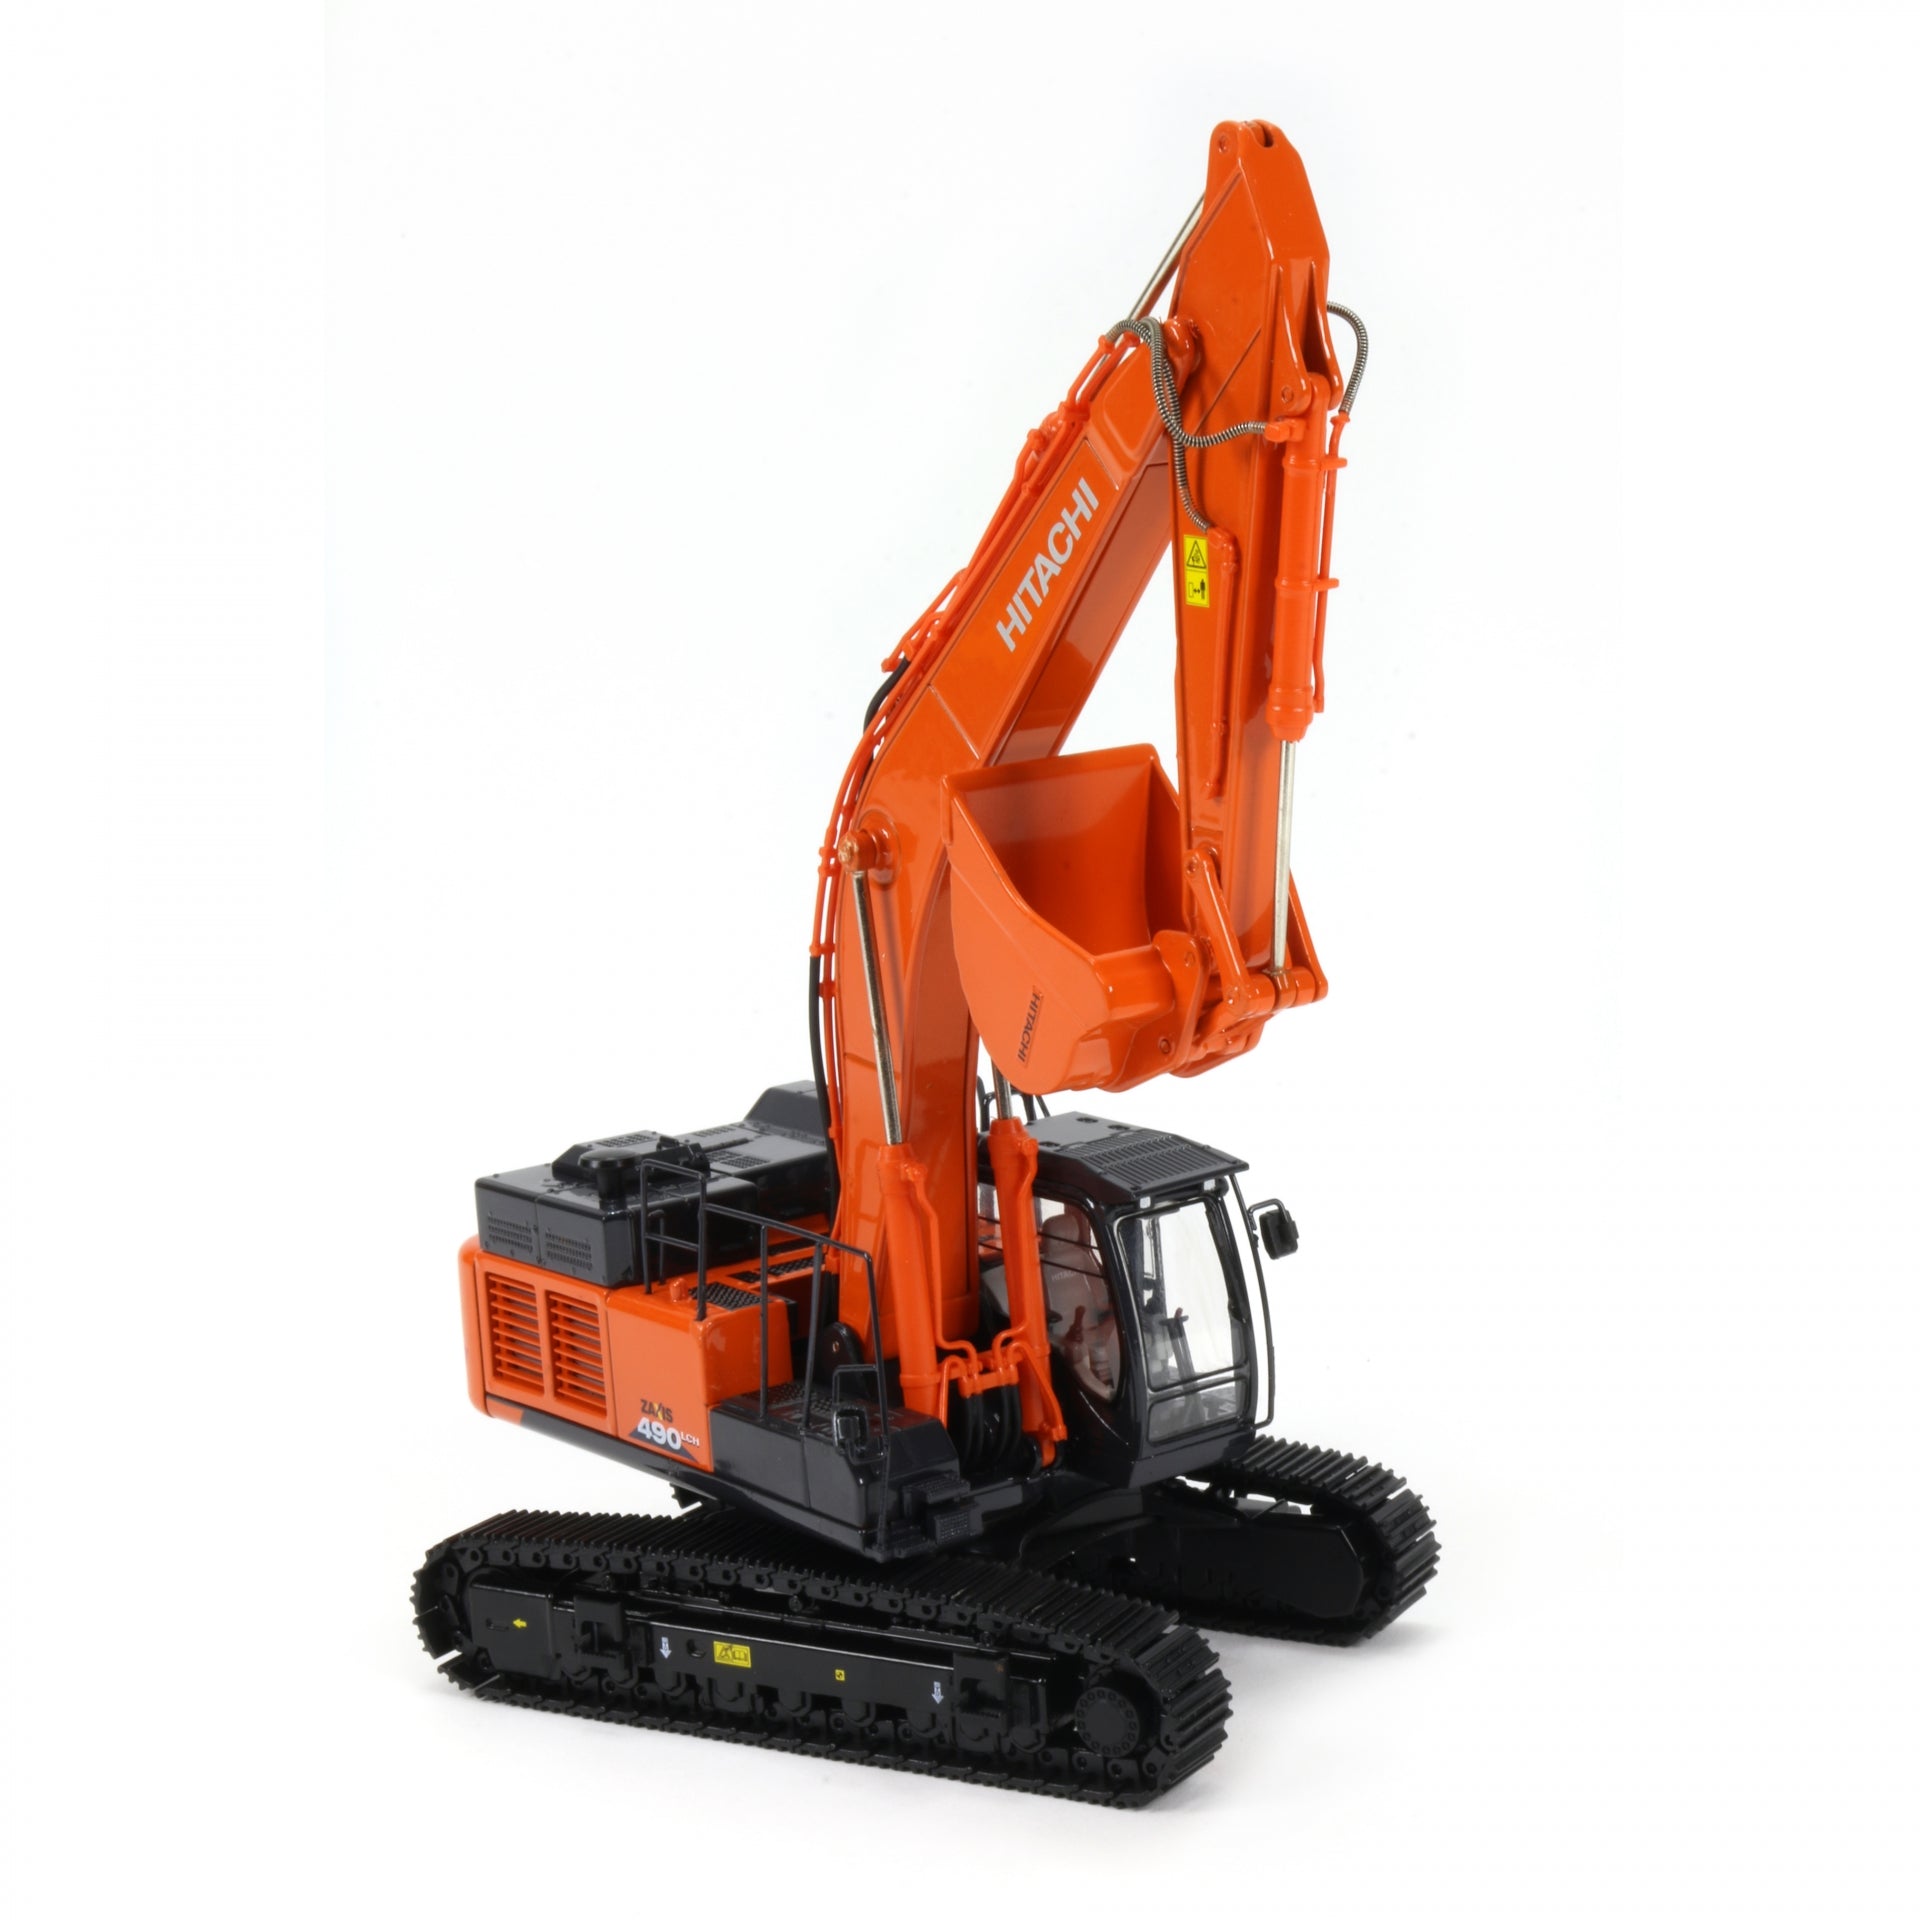 Scale ZX490LCH-6 Hydraulic excavator